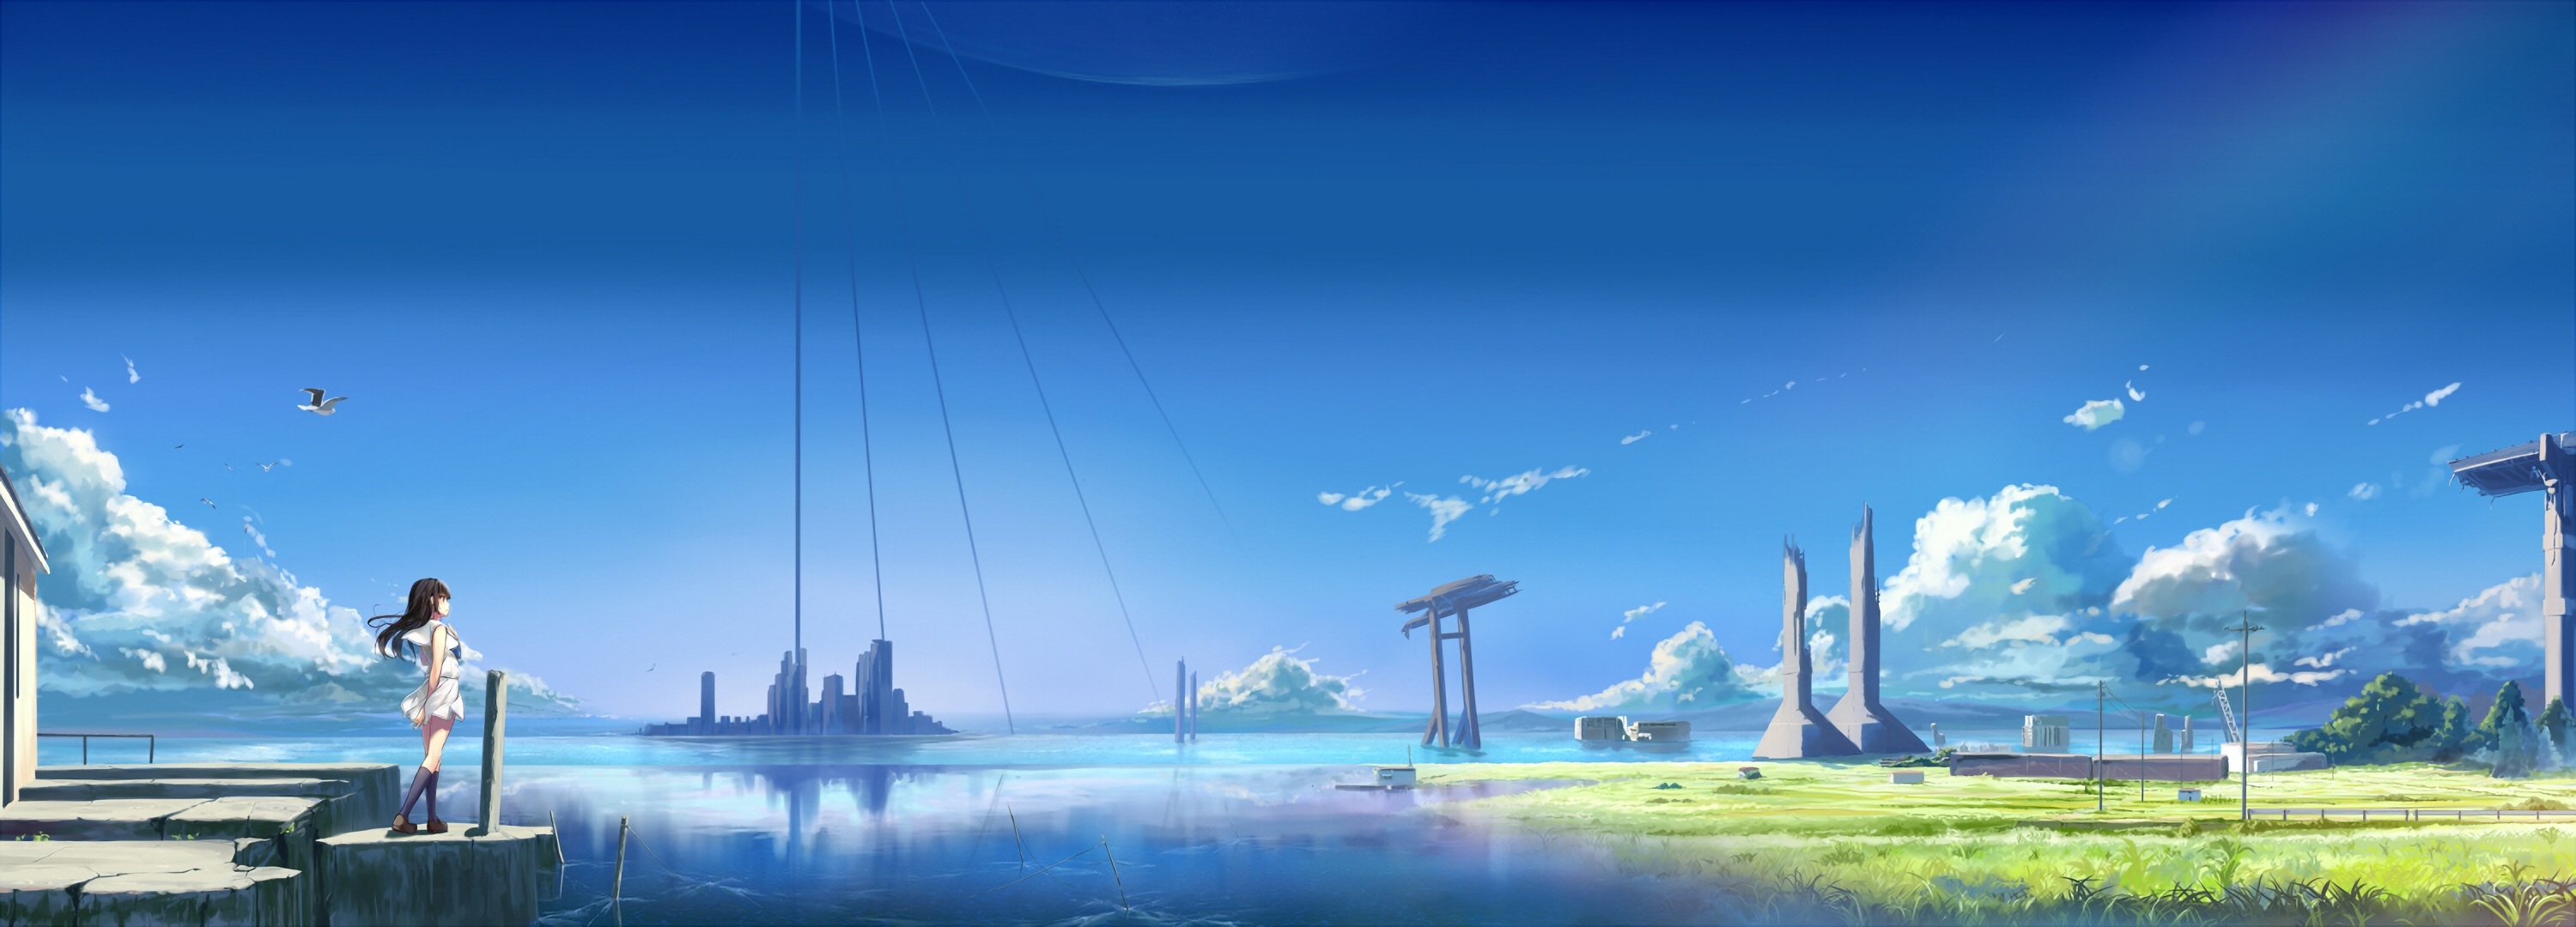 Фото бесплатно обои аниме девушка, пейзаж, чистое небо